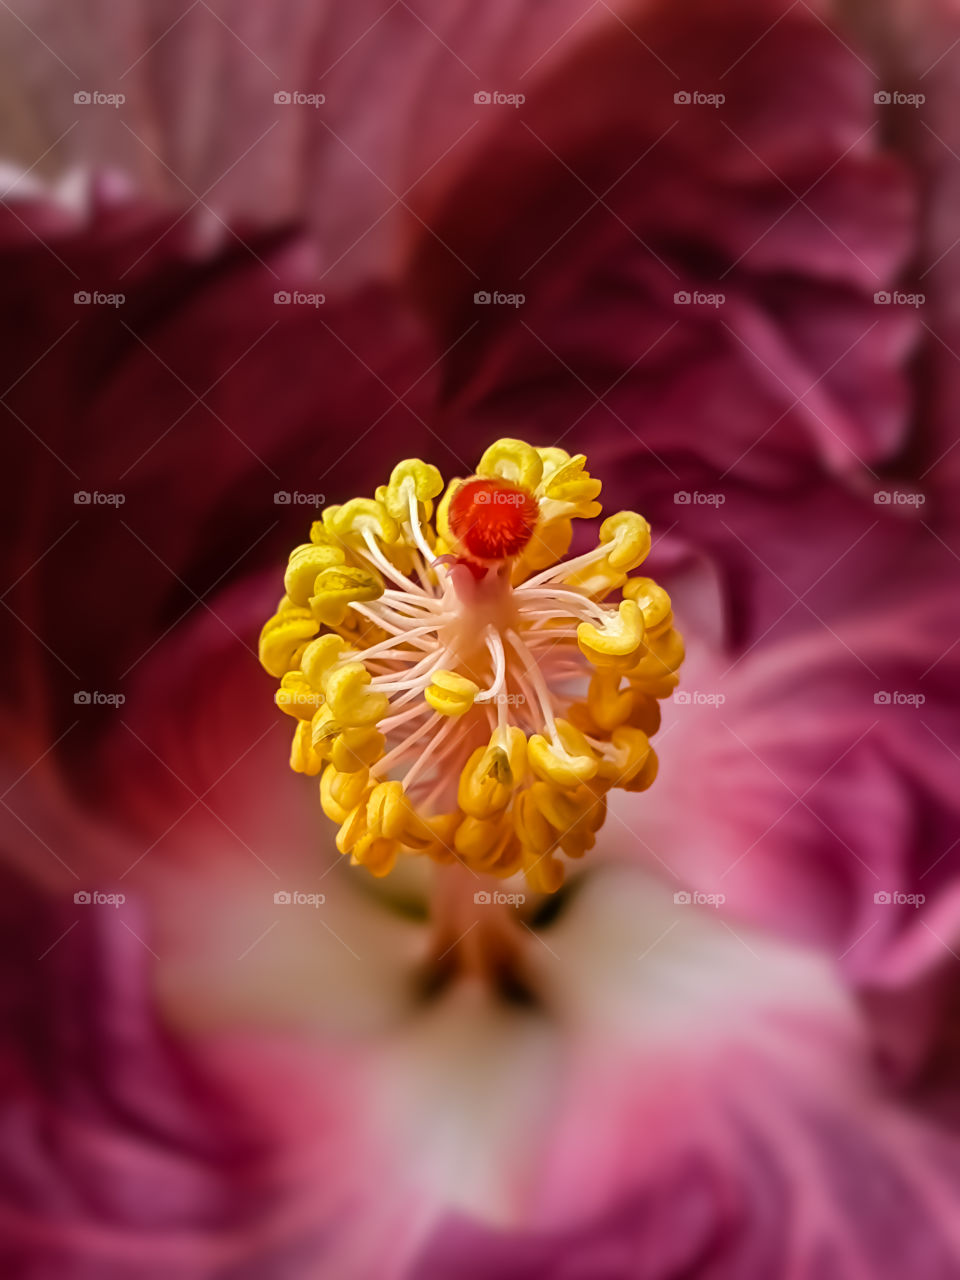 yellow inside of a flower